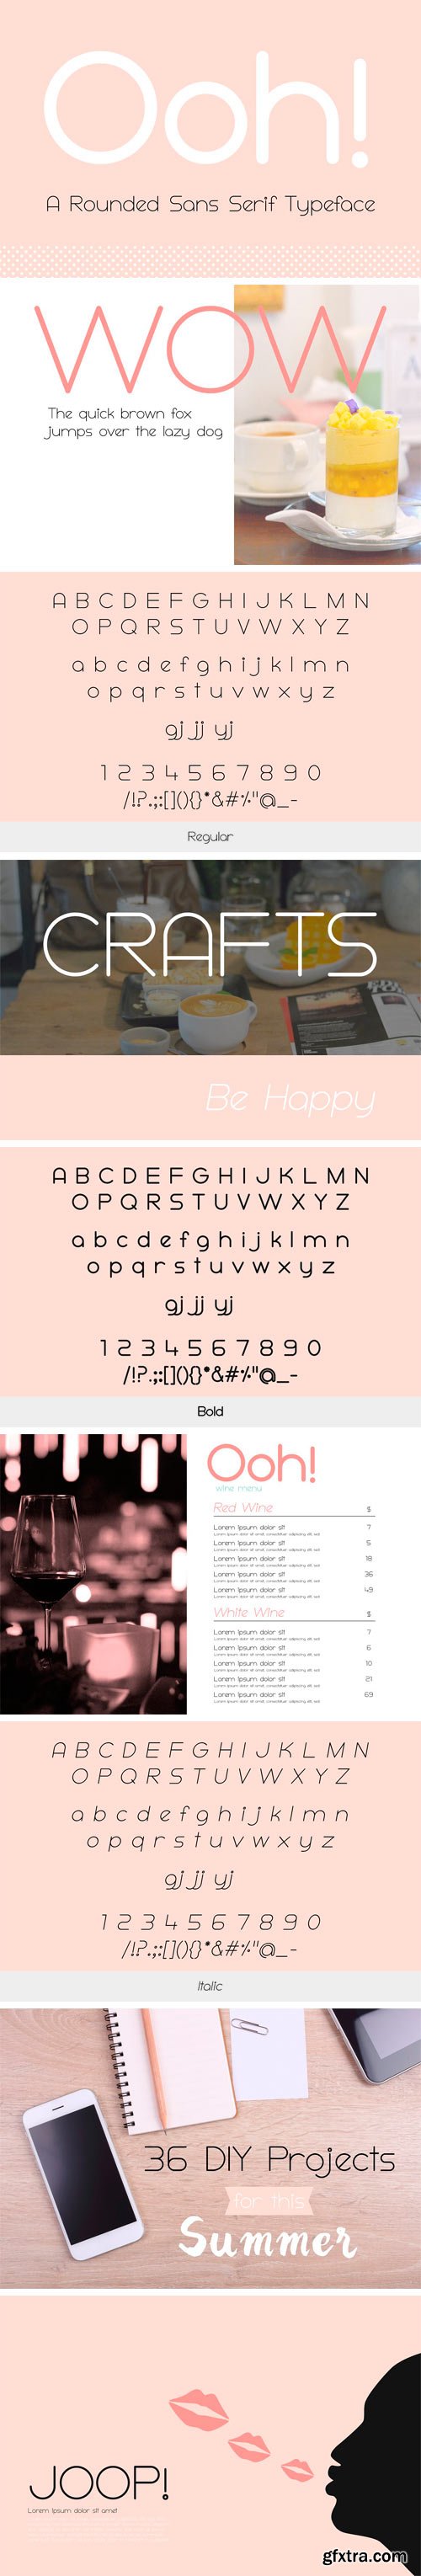 CM 1603313 - Ooh! Rounded Sans Serif Typeface